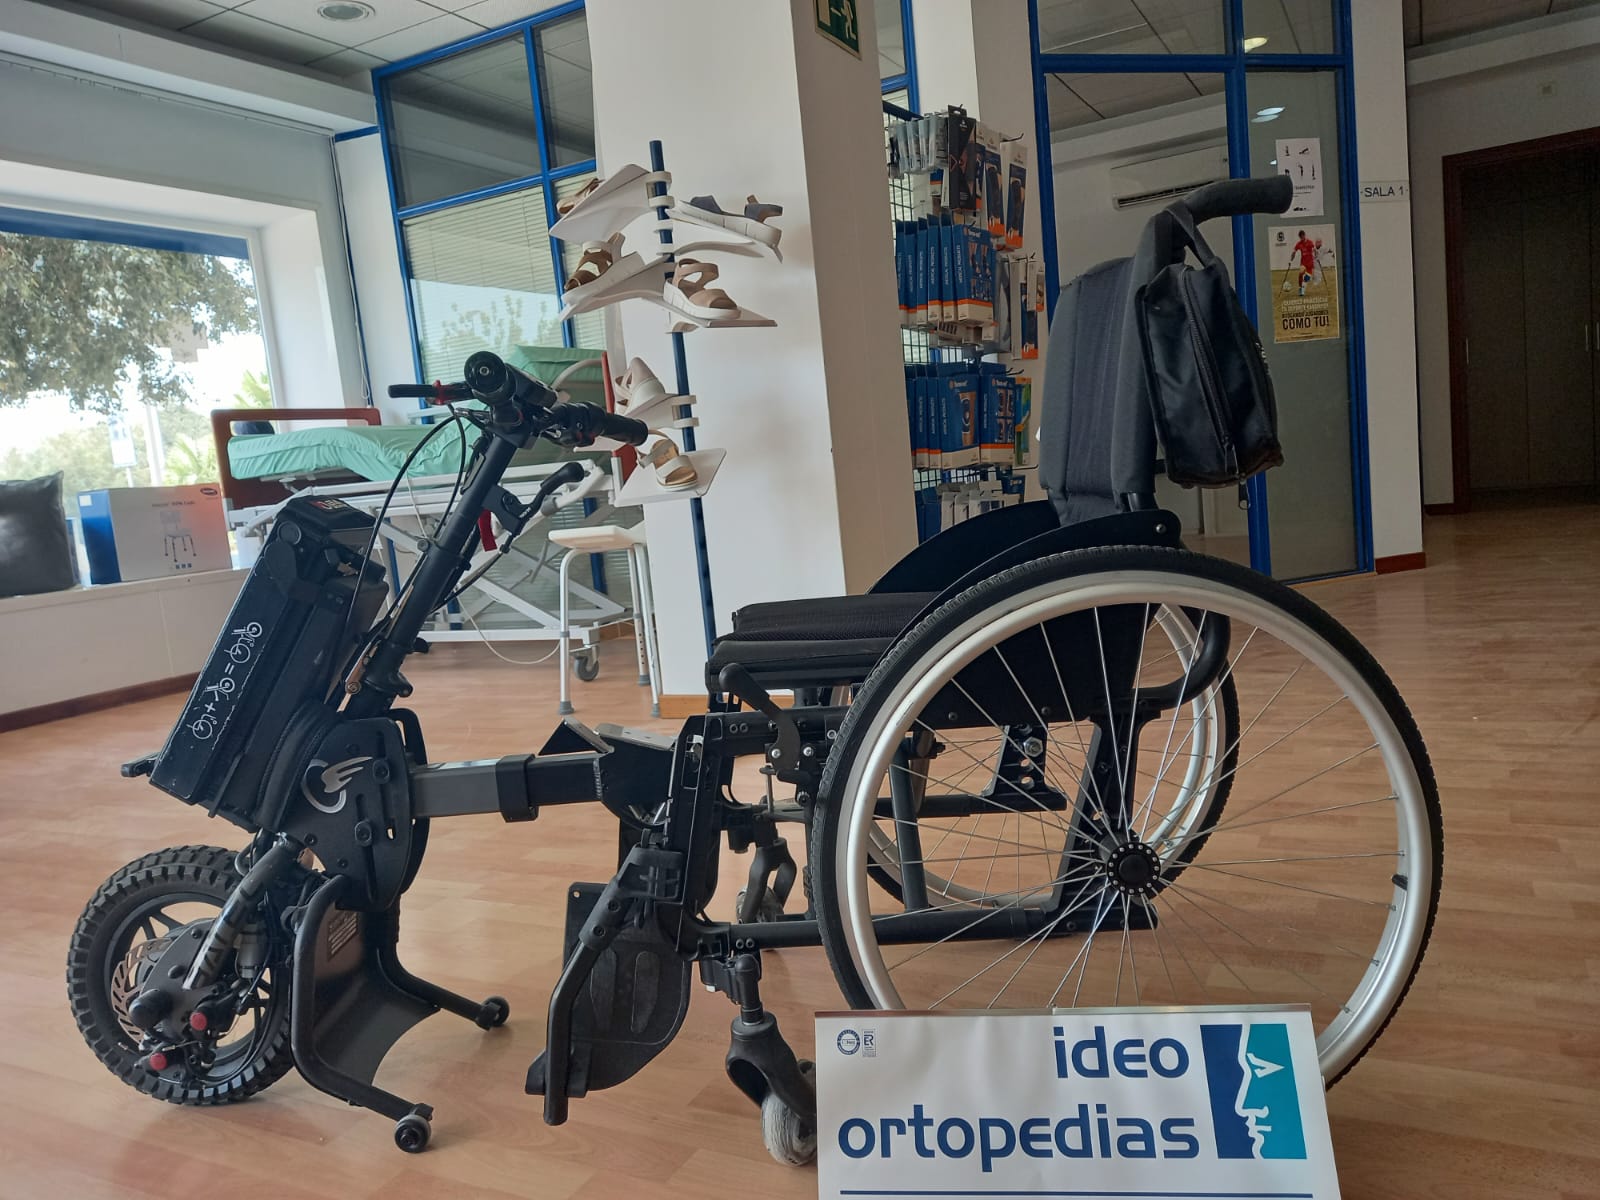 Ortopedia Ideo servicio oficial Batec Mobility en Sevilla